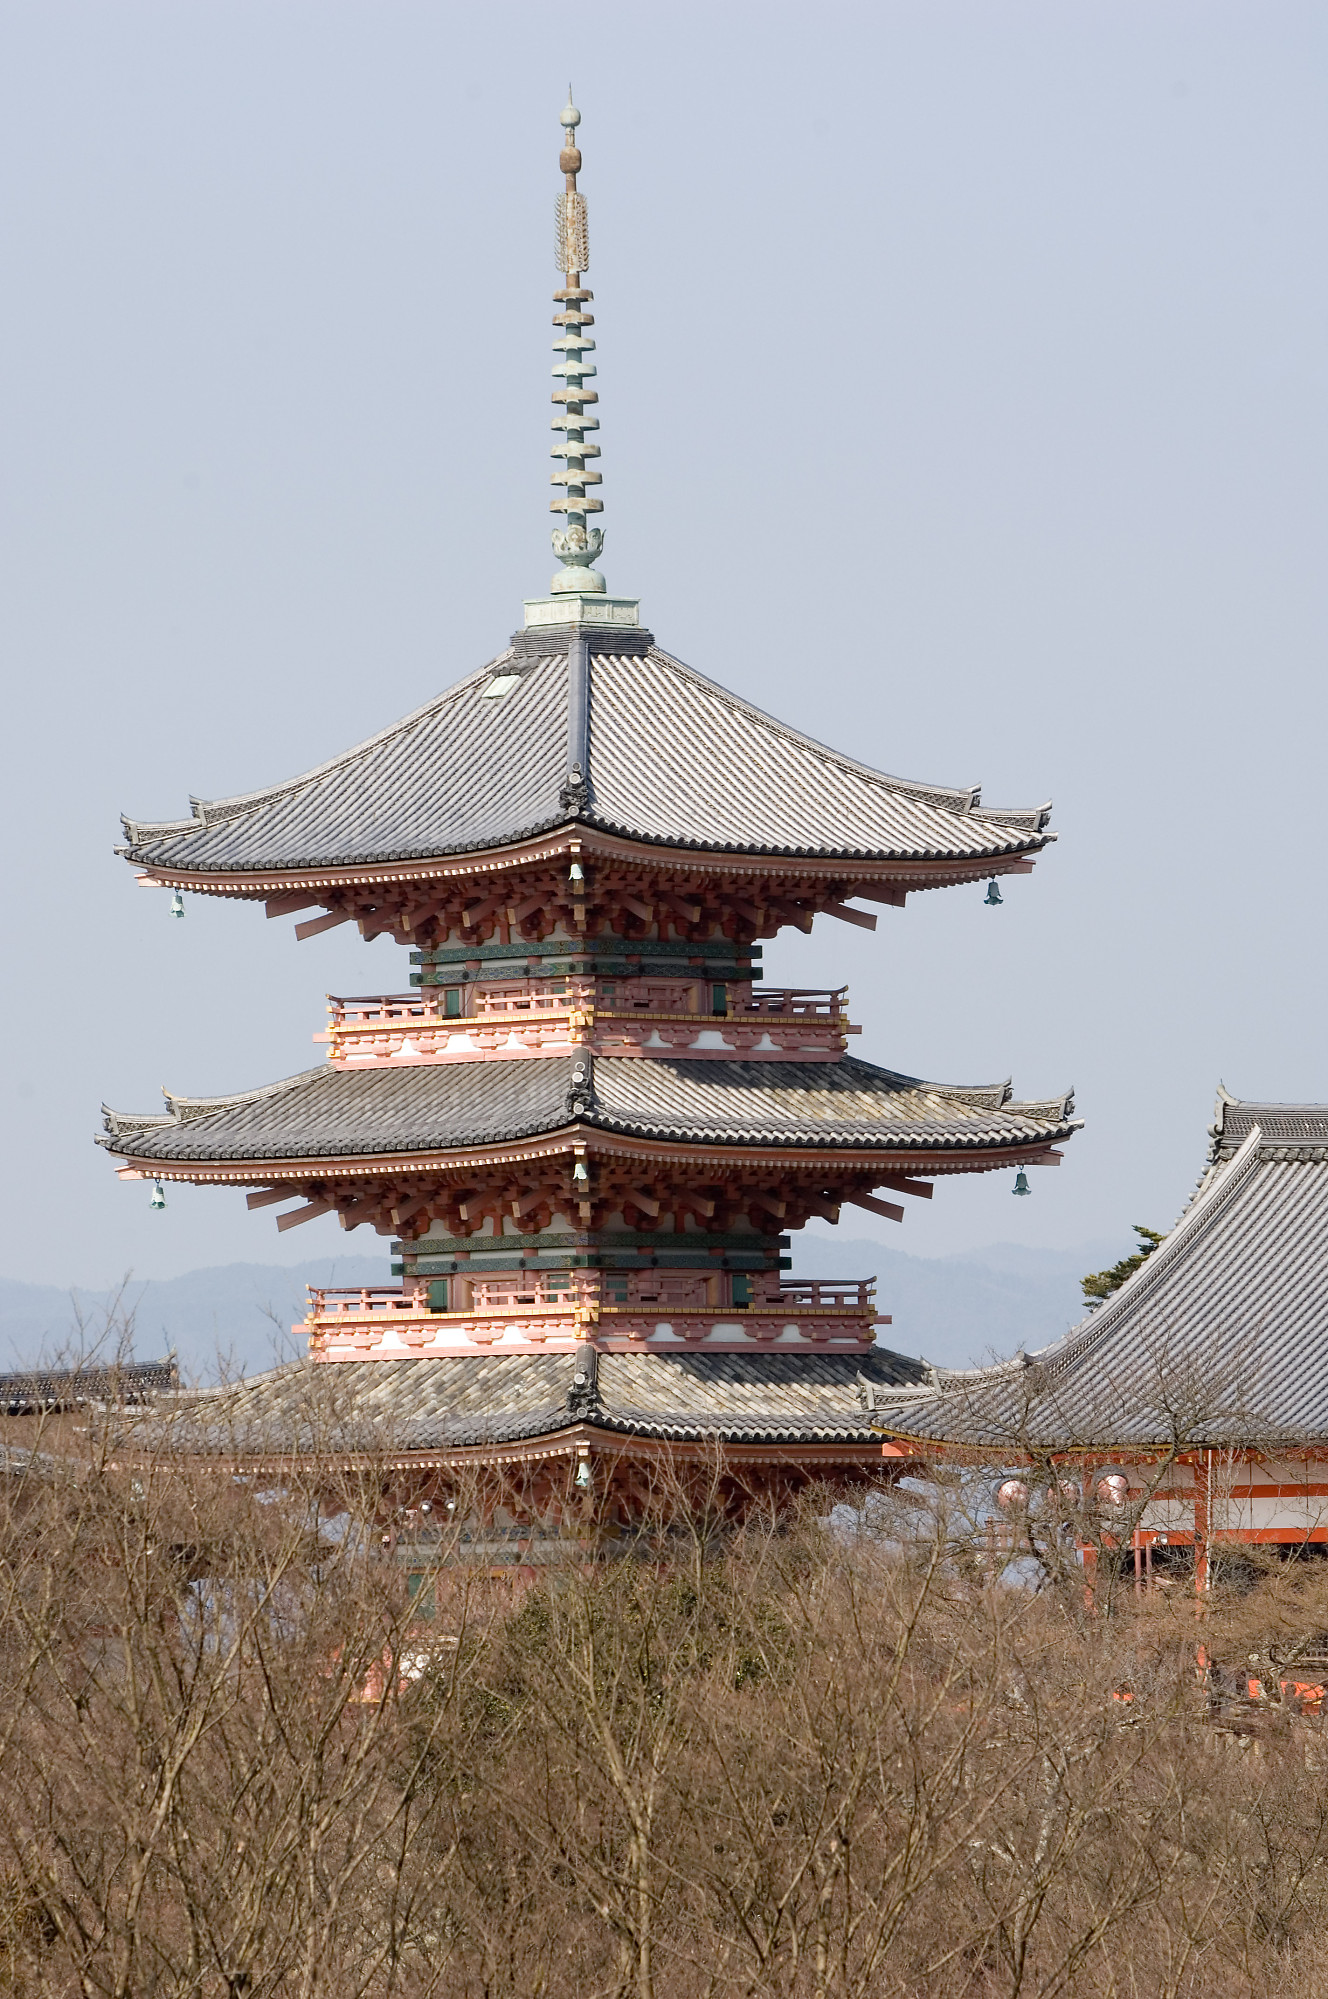 http://www.johnharveyphoto.com/Japan4/Kyoto/PagodaAtKiyomizu-deraLg.jpg